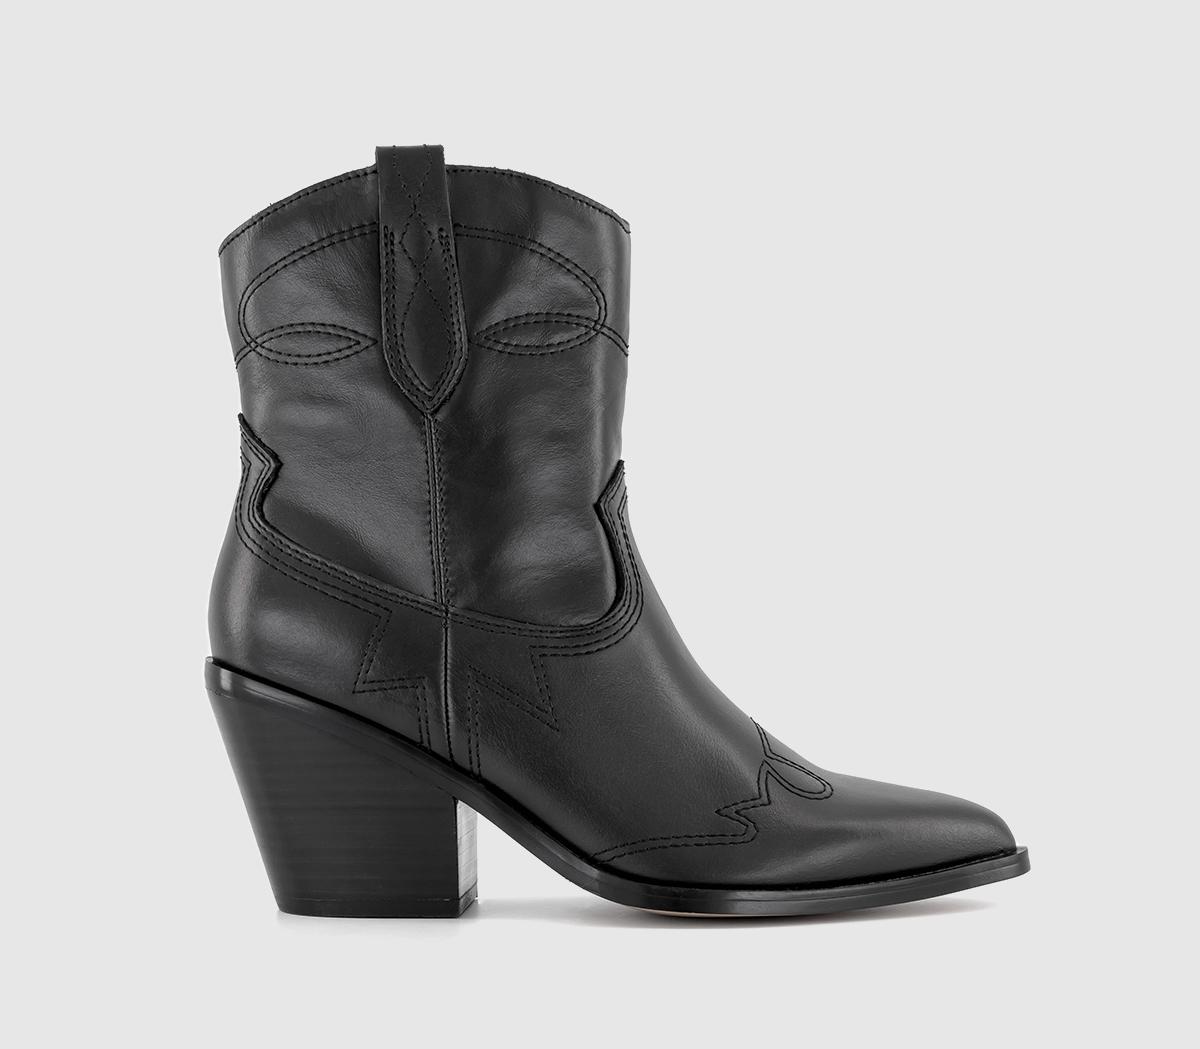 OFFICEAnderson Western Ankle BootsBlack Leather